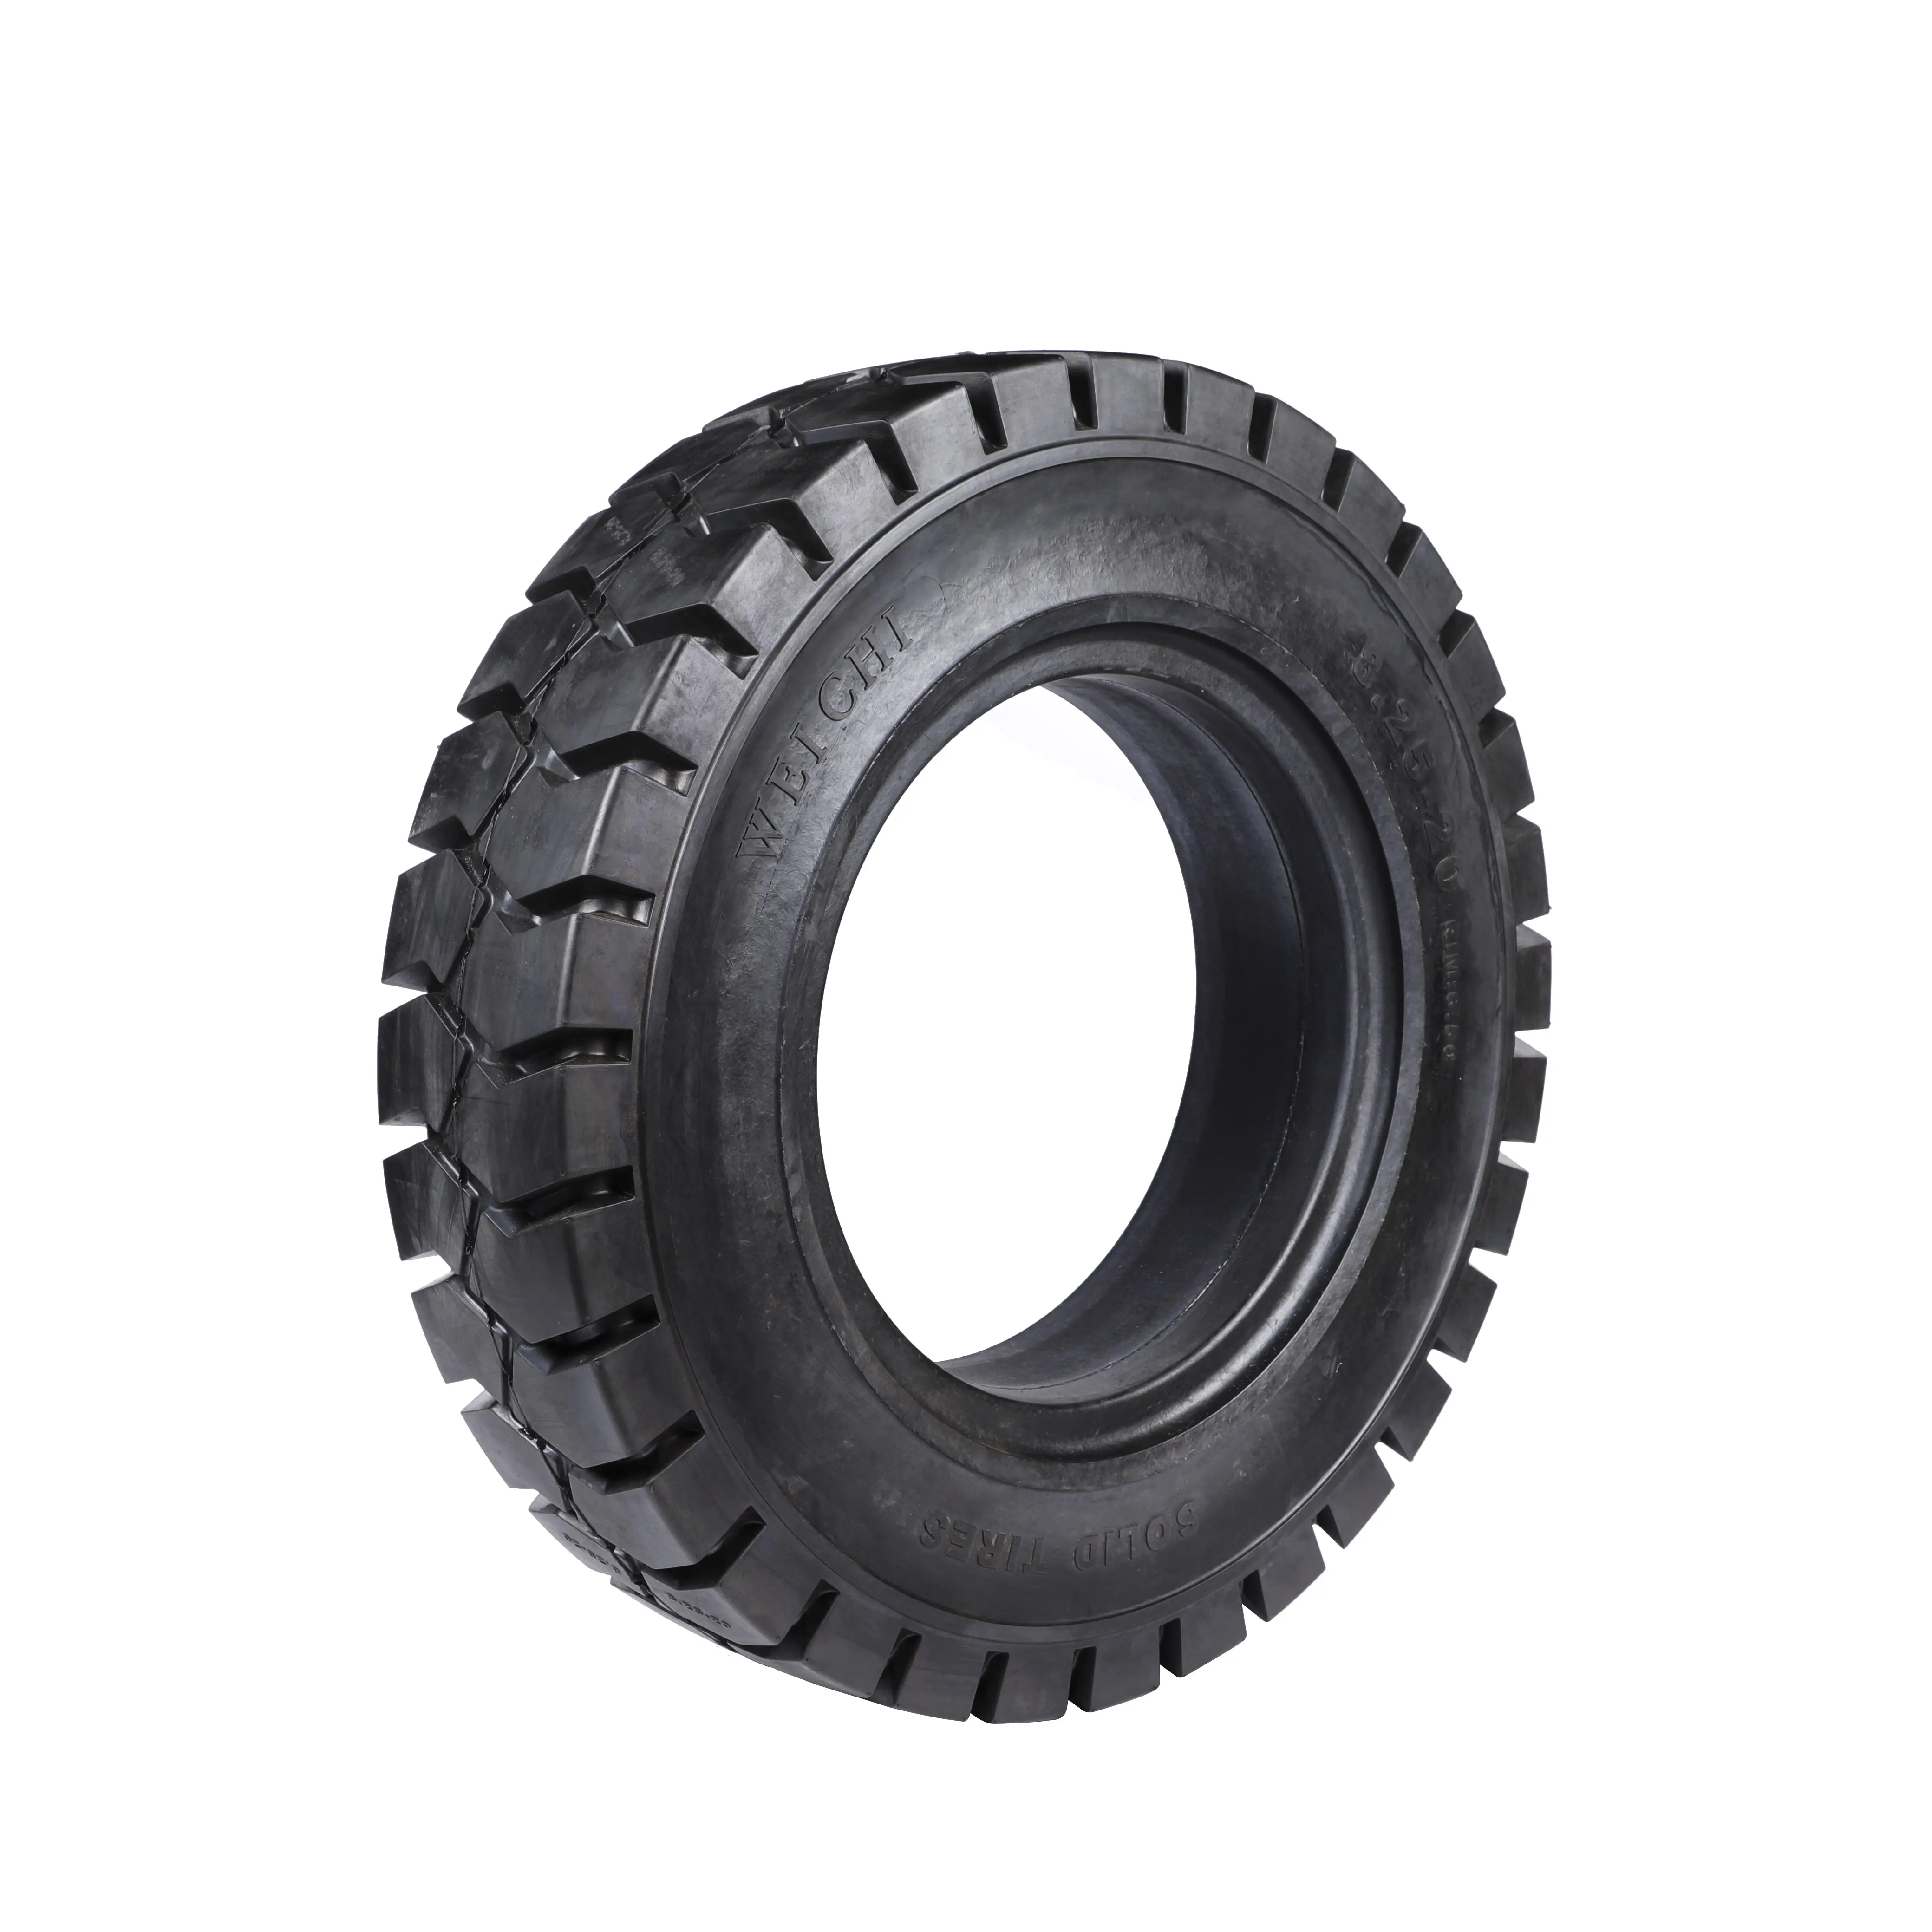 औद्योगिक फोर्कलिफ्ट टायर अच्छी गुणवत्ता वाला रबर टायर A8.25-20 फोर्कलिफ्ट के लिए ठोस टायर